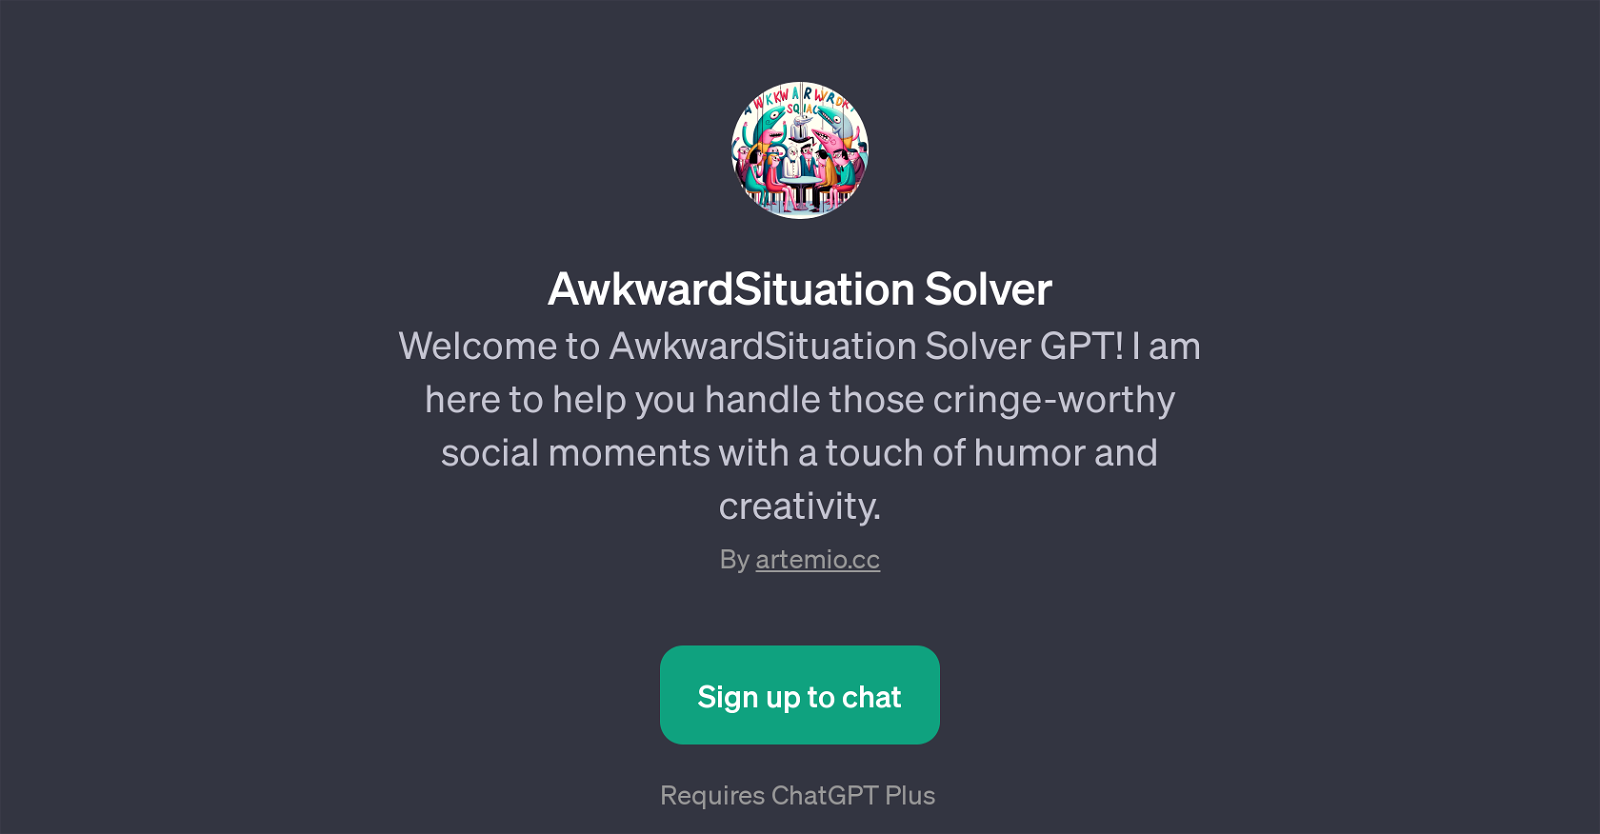 AwkwardSituation Solver GPT website